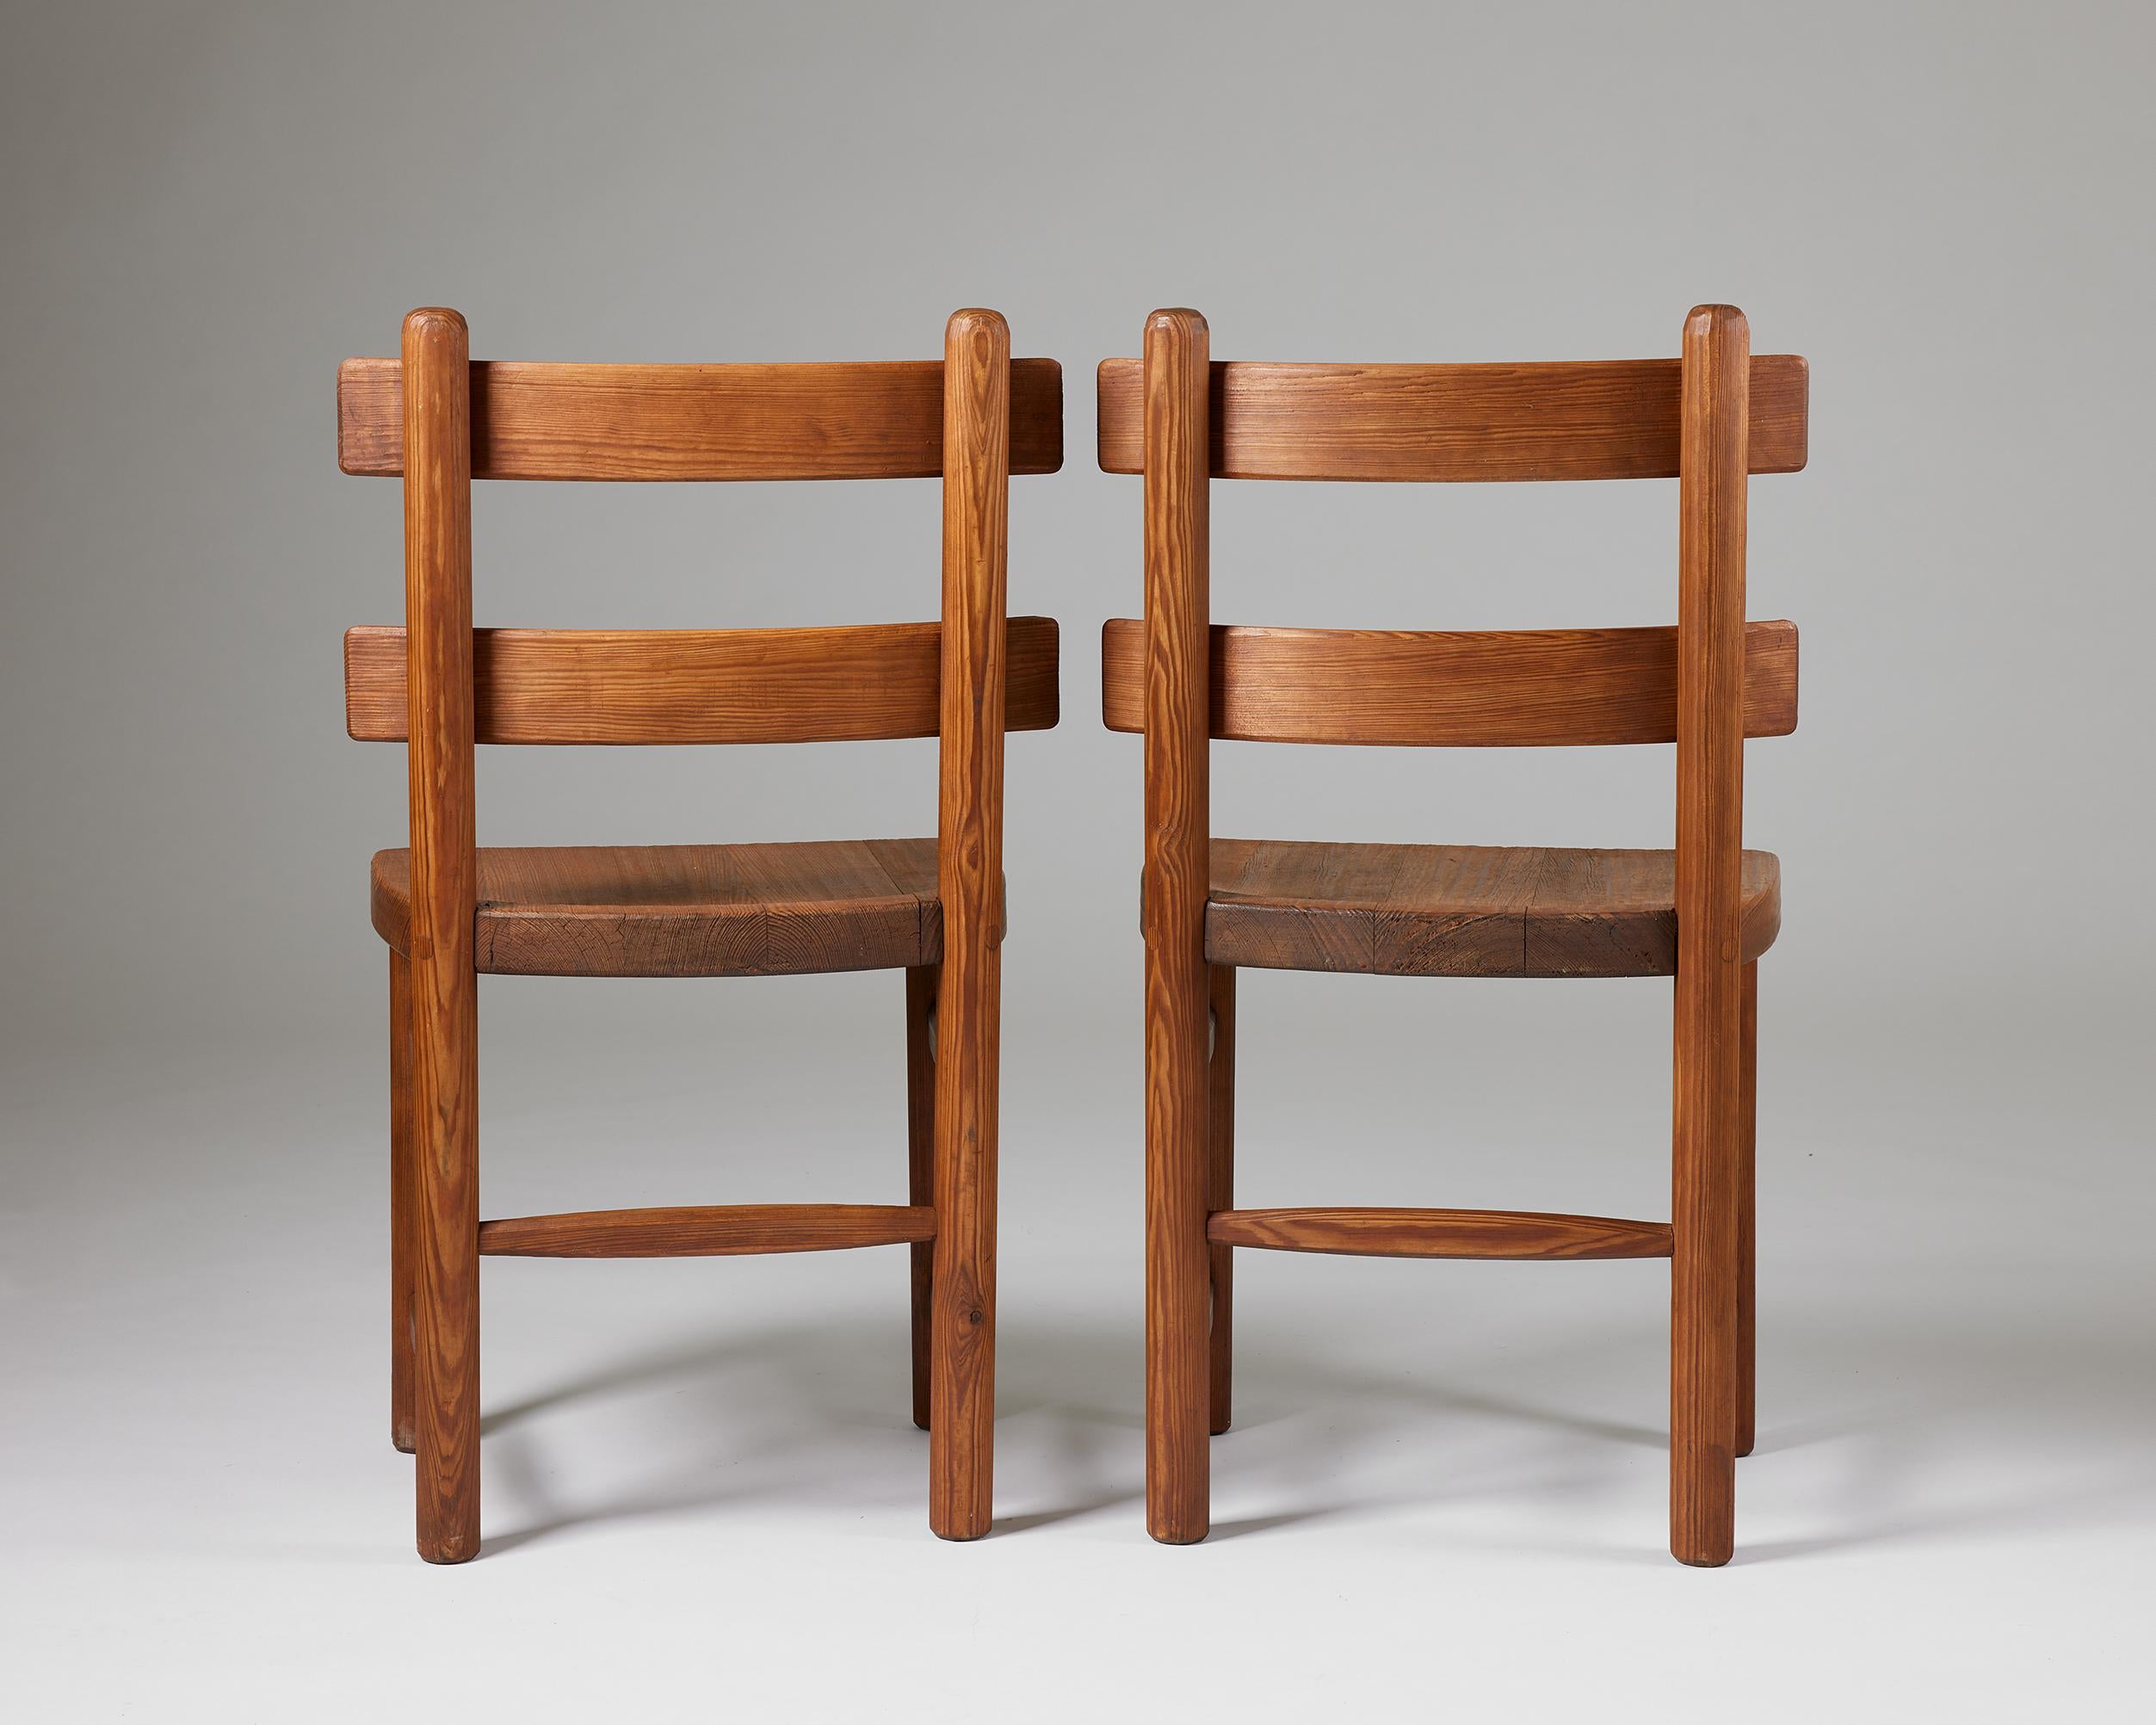 20th Century Pair of ‘Sandhamn’ Chairs Designed by Axel Einar Hjorth for Nordiska Kompaniet